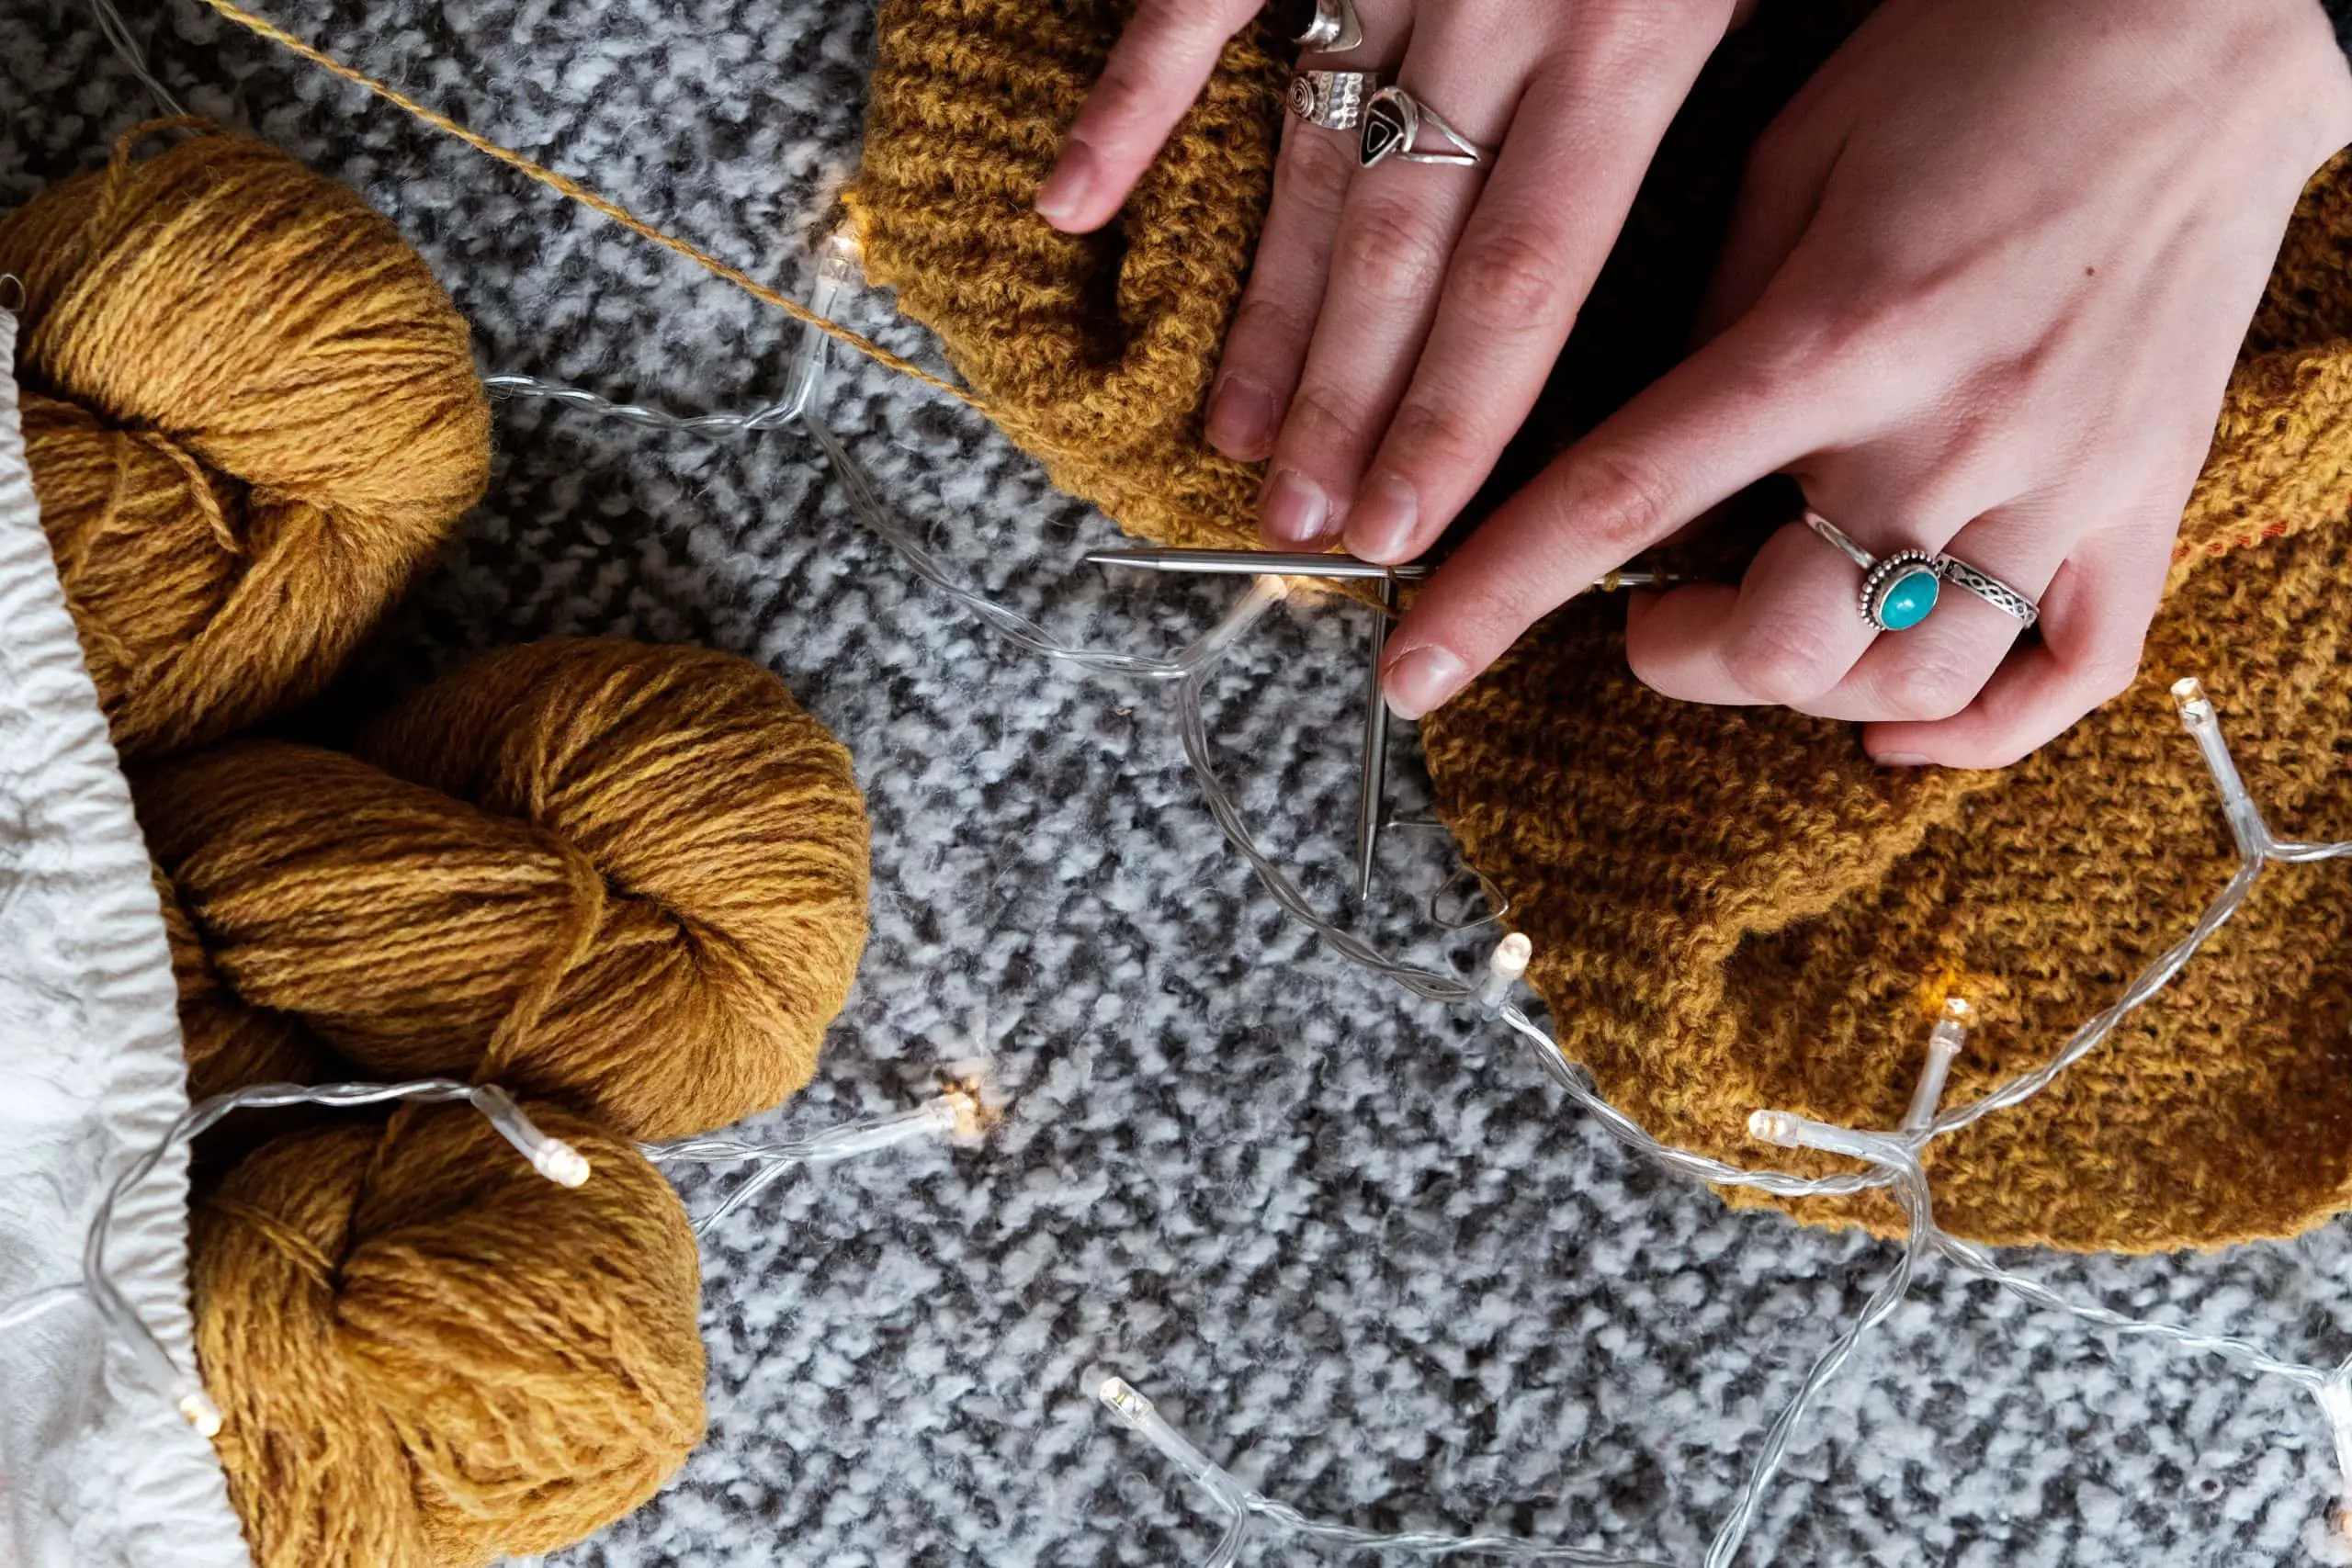 What should a beginner knitter buy?